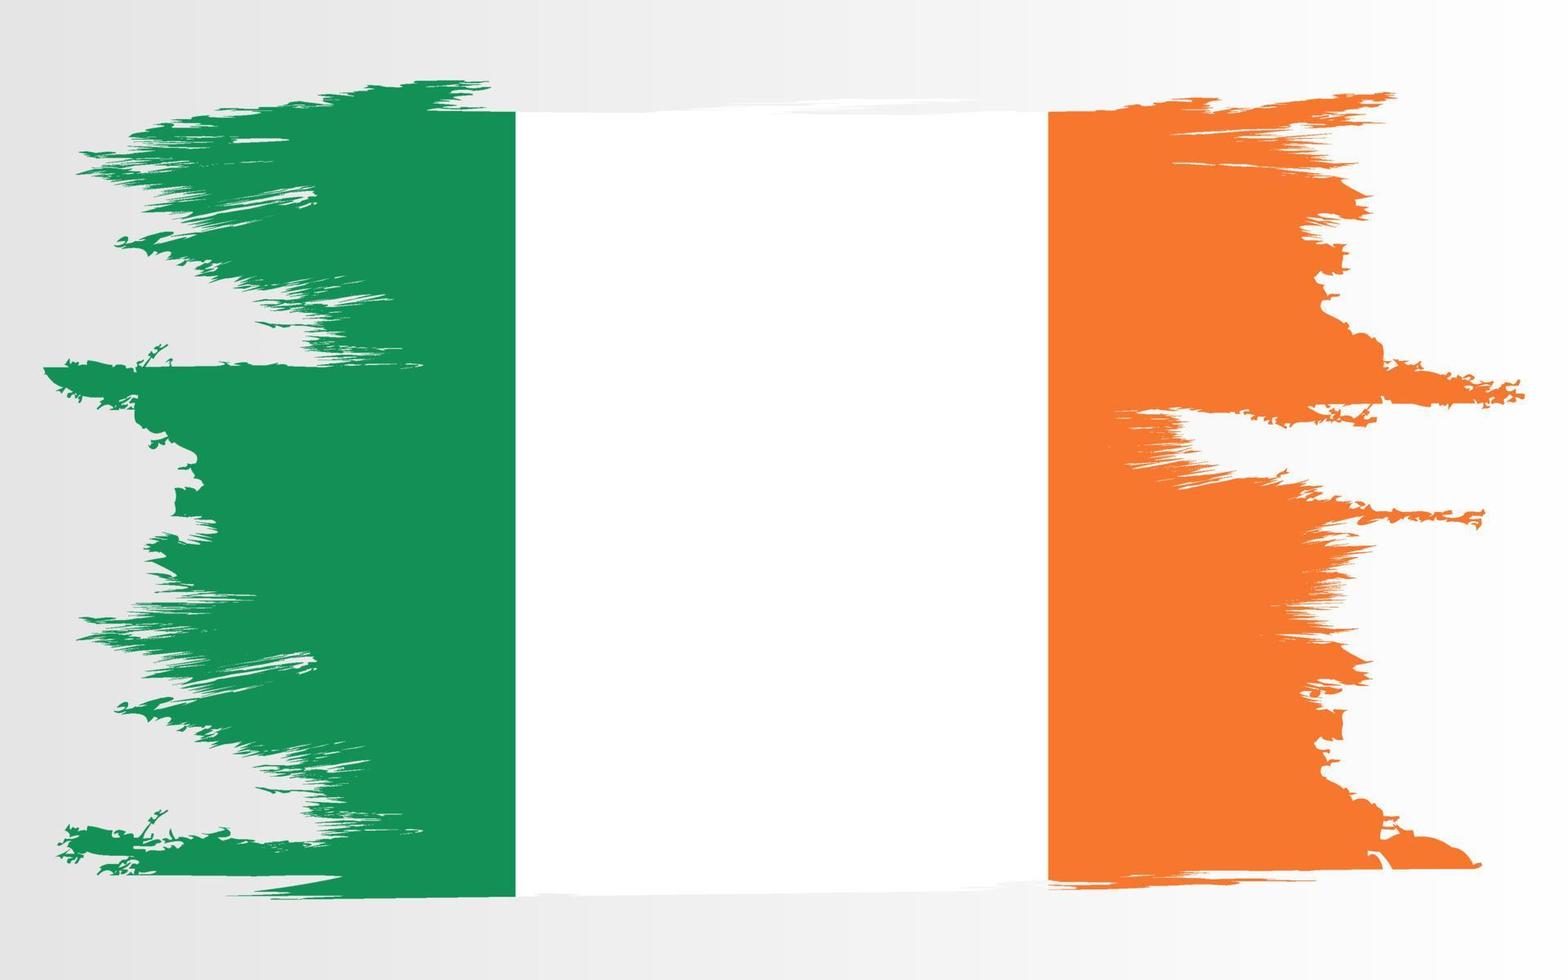 Irlands flagga, penseldrag bakgrund. vektor